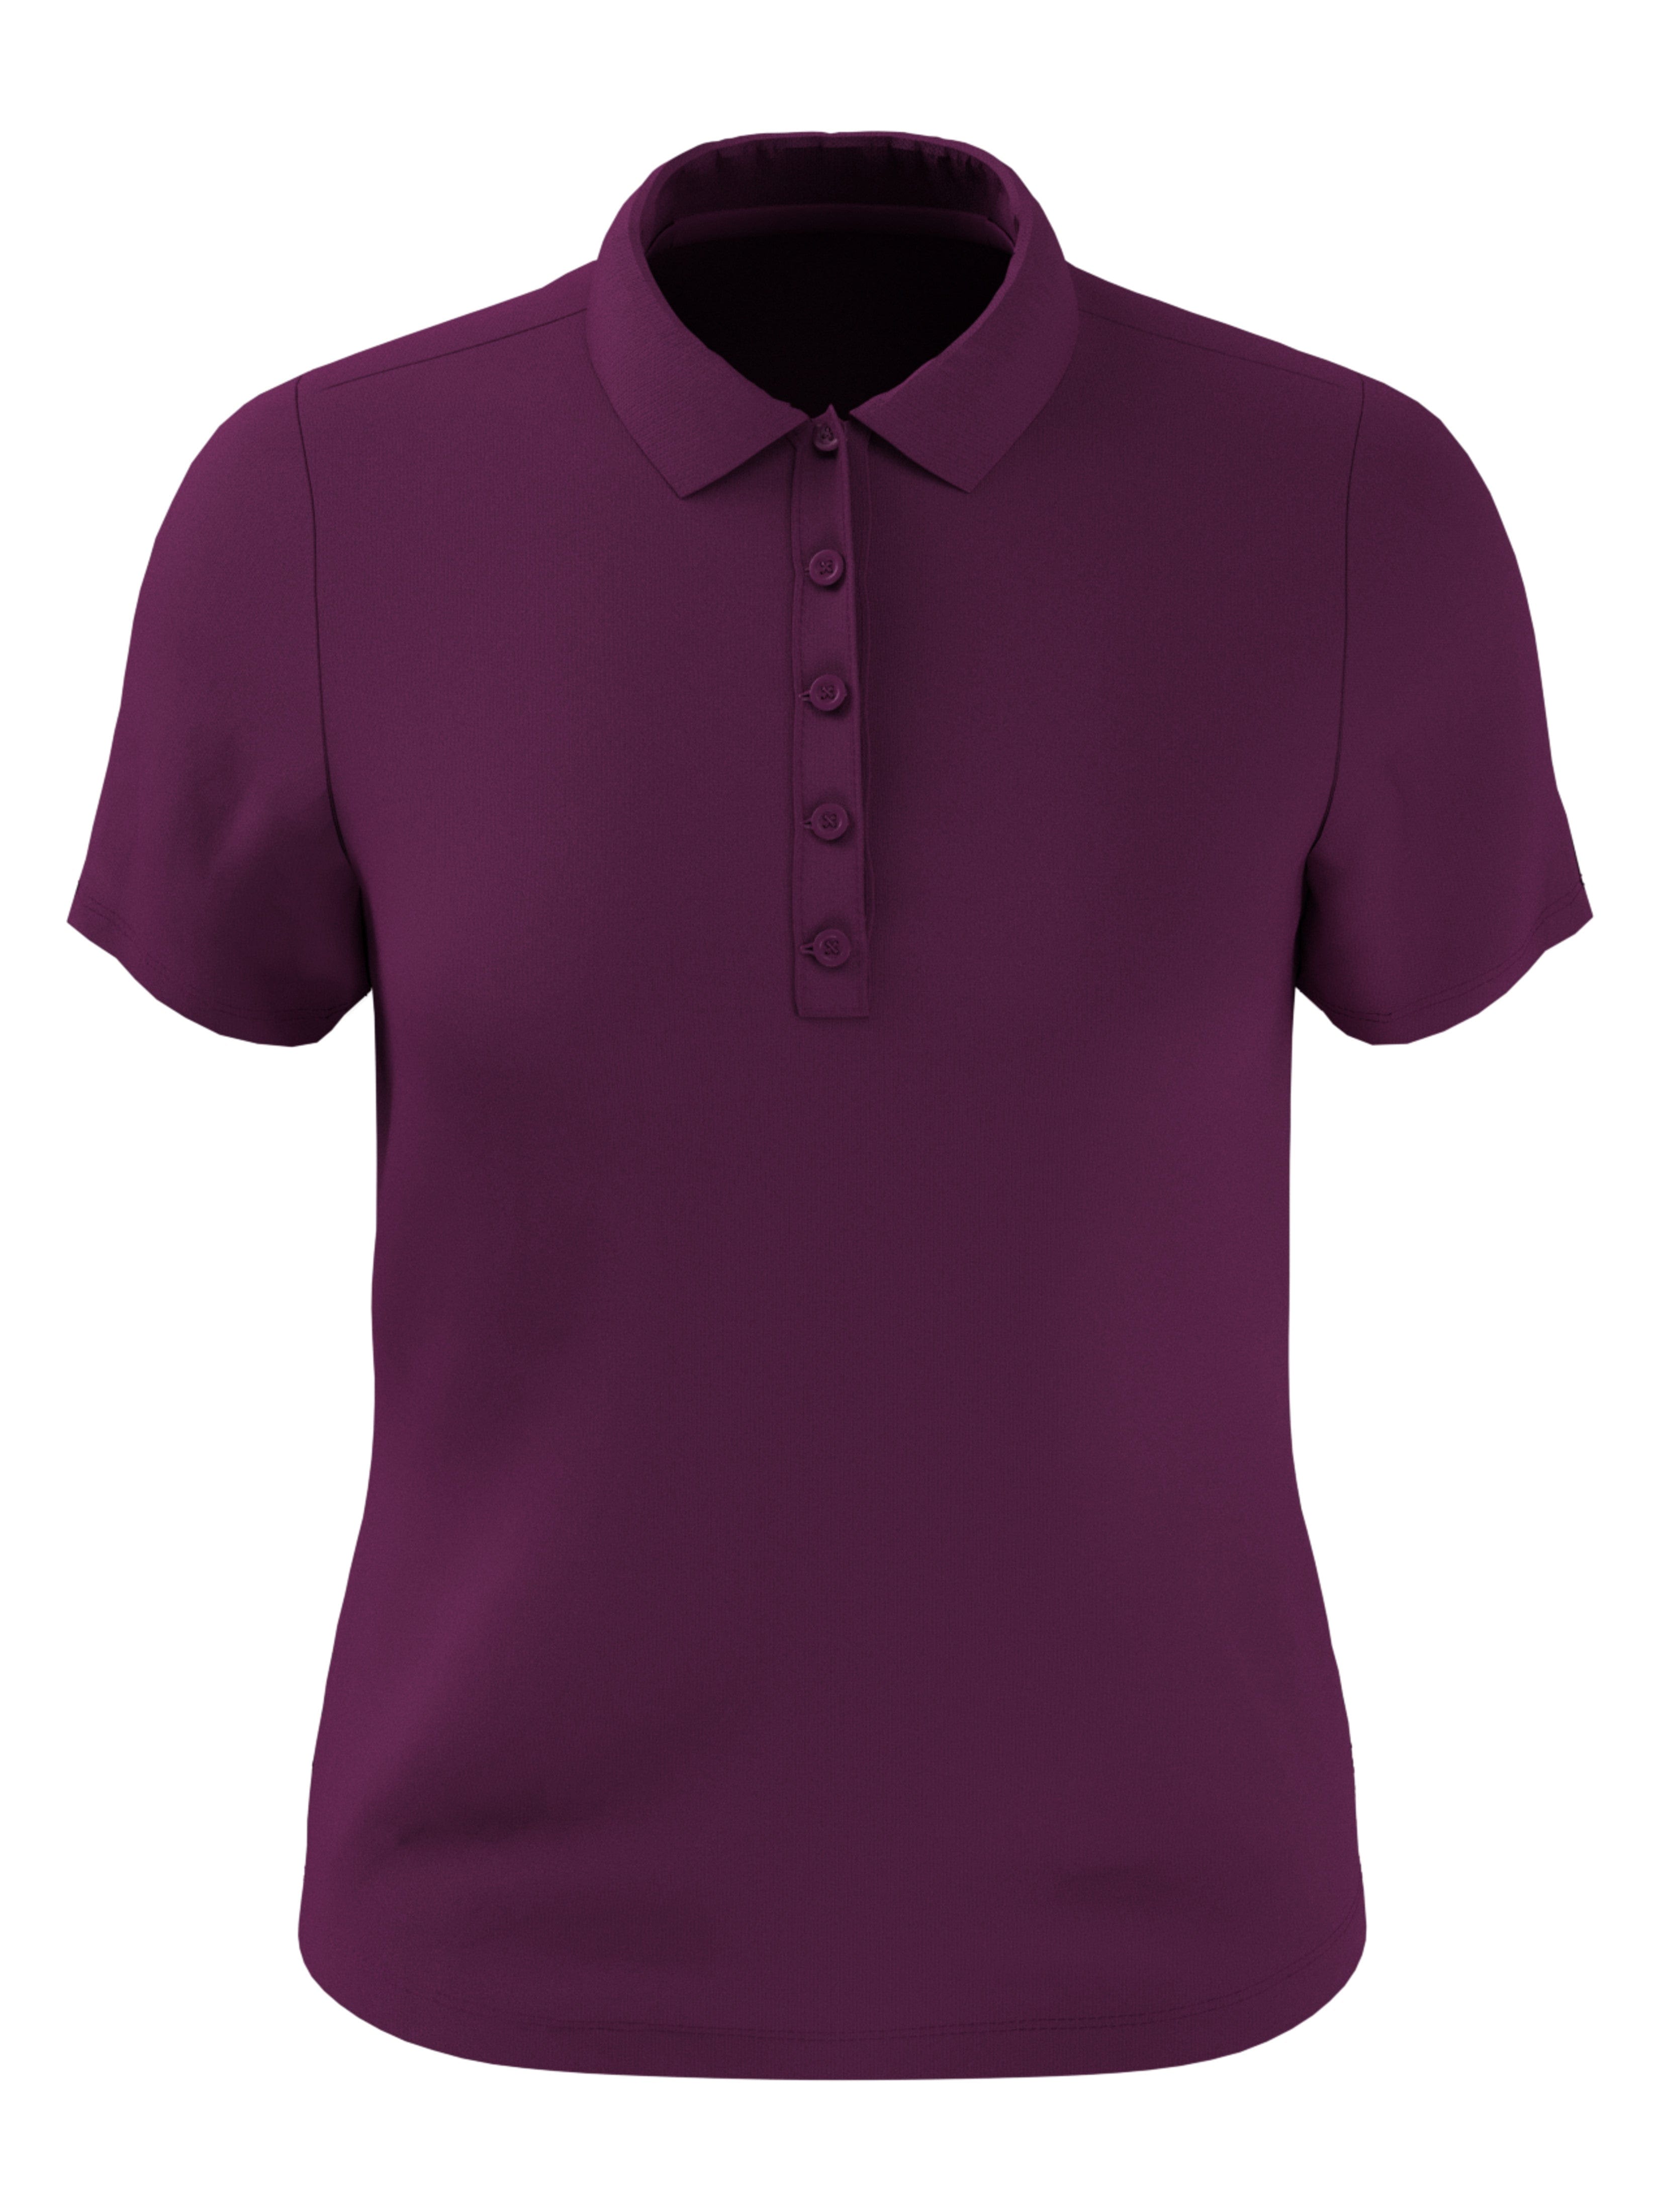 Callaway Apparel Womens Swing Tech™ Solid Polo Shirt, Size Small, Dark Purple, 100% Polyester | Golf Apparel Shop